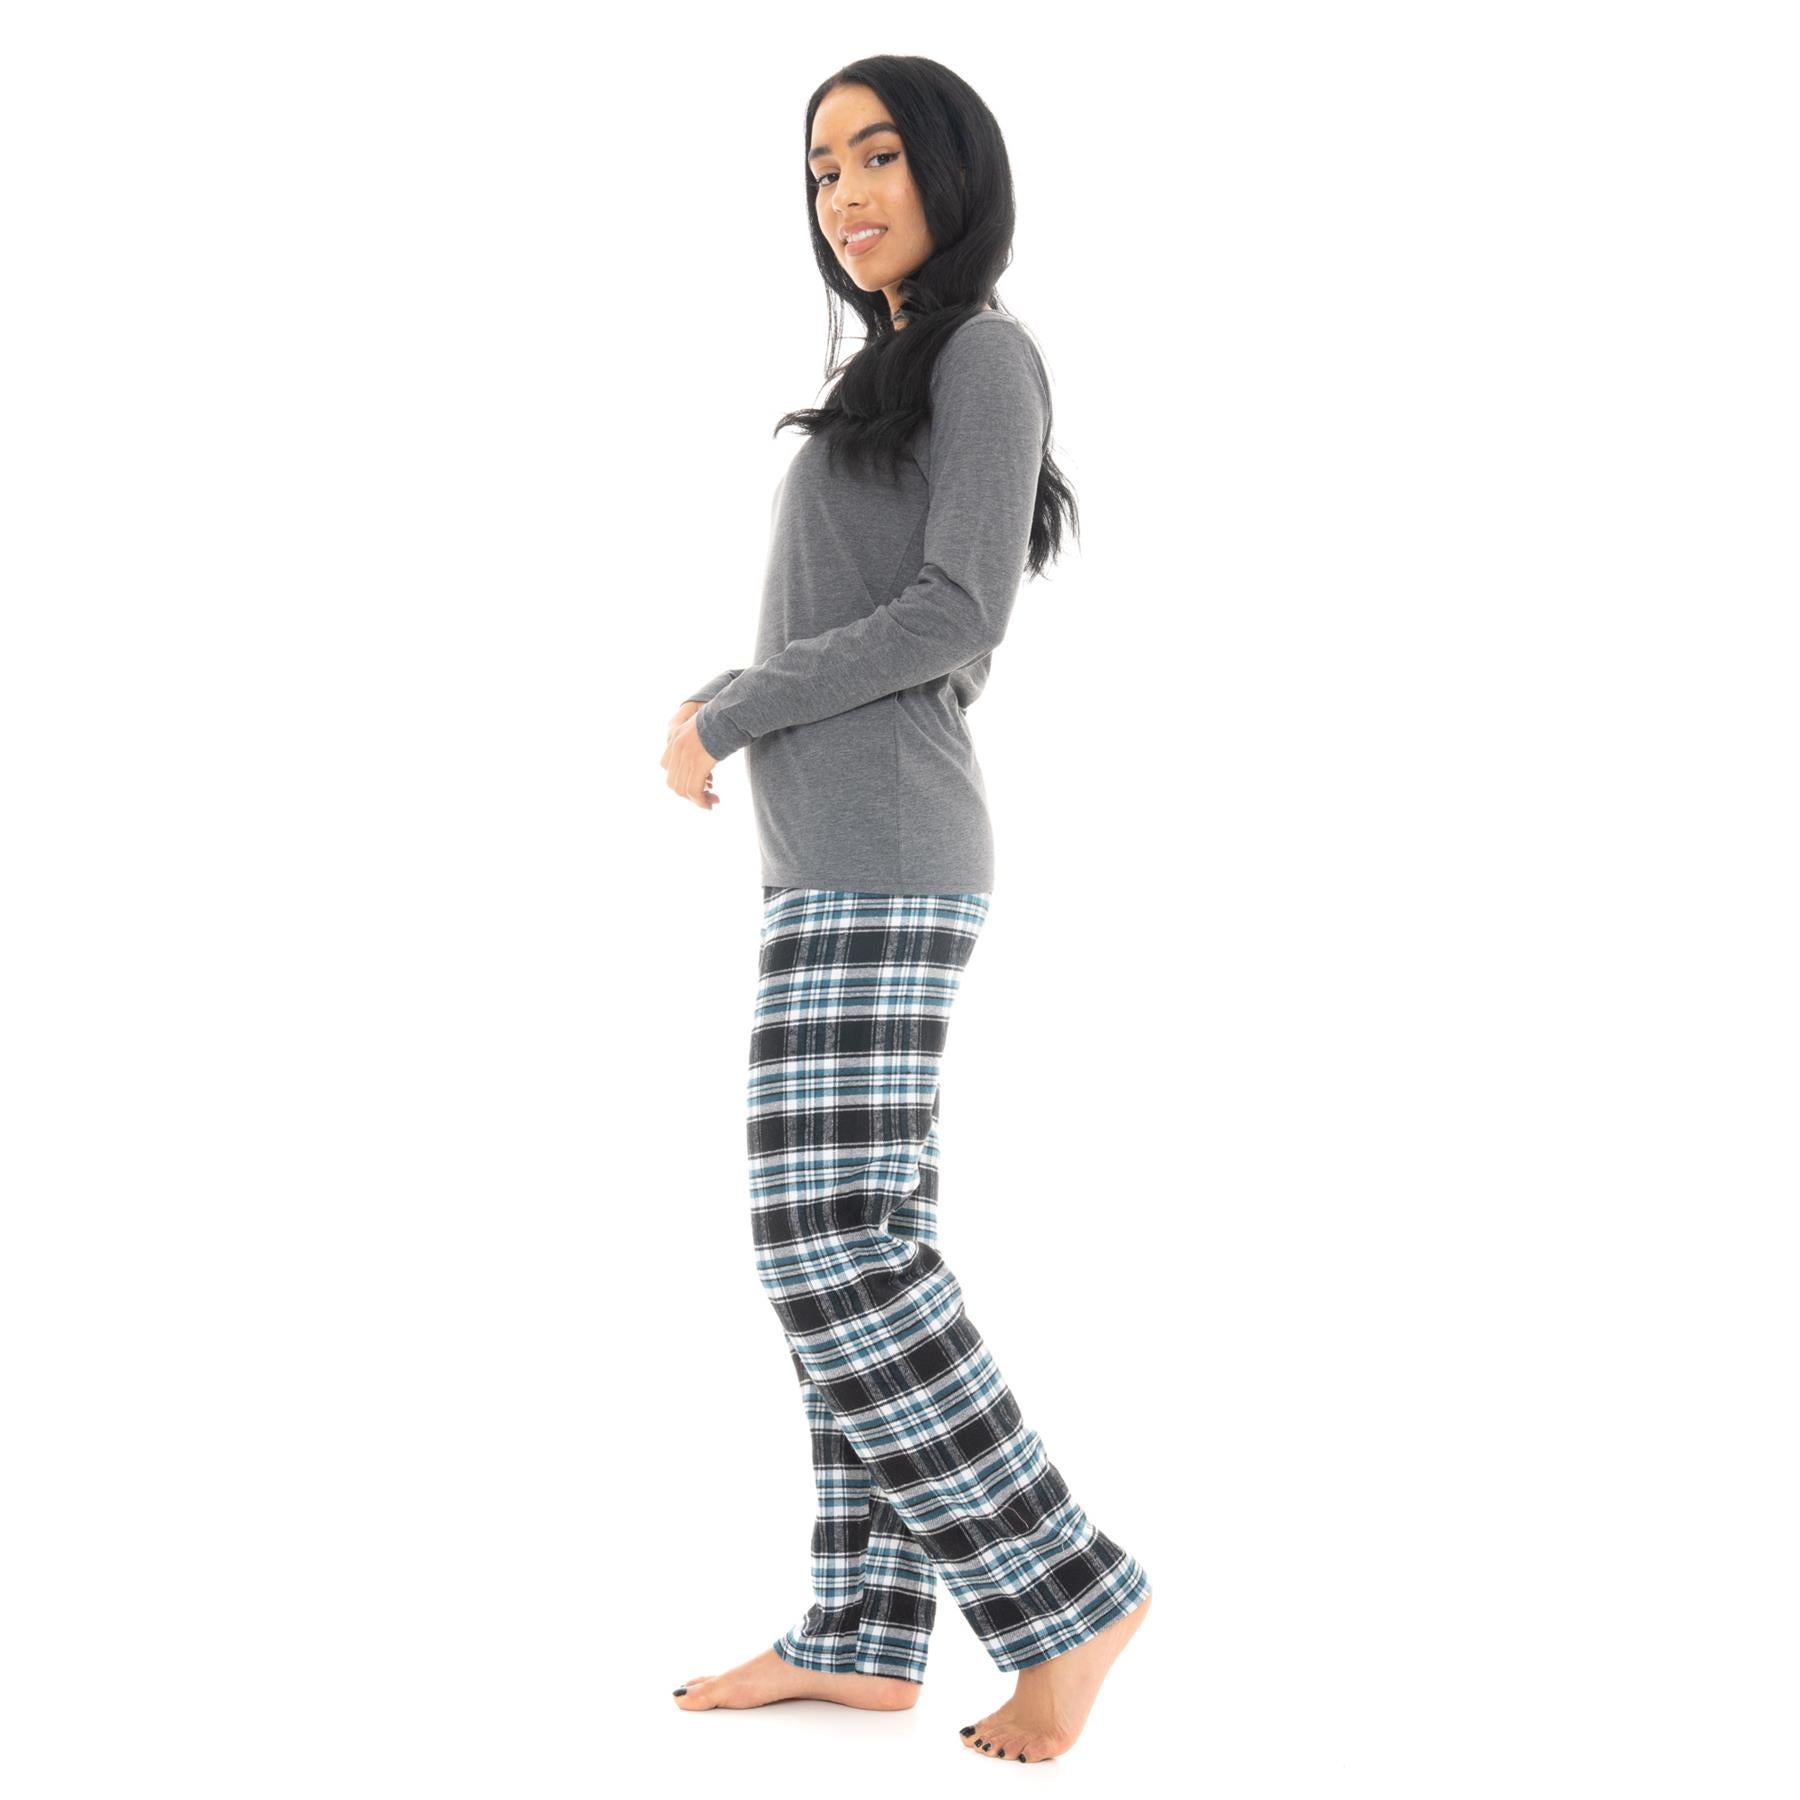 Silver & Teal Flannel Check Pyjama Set